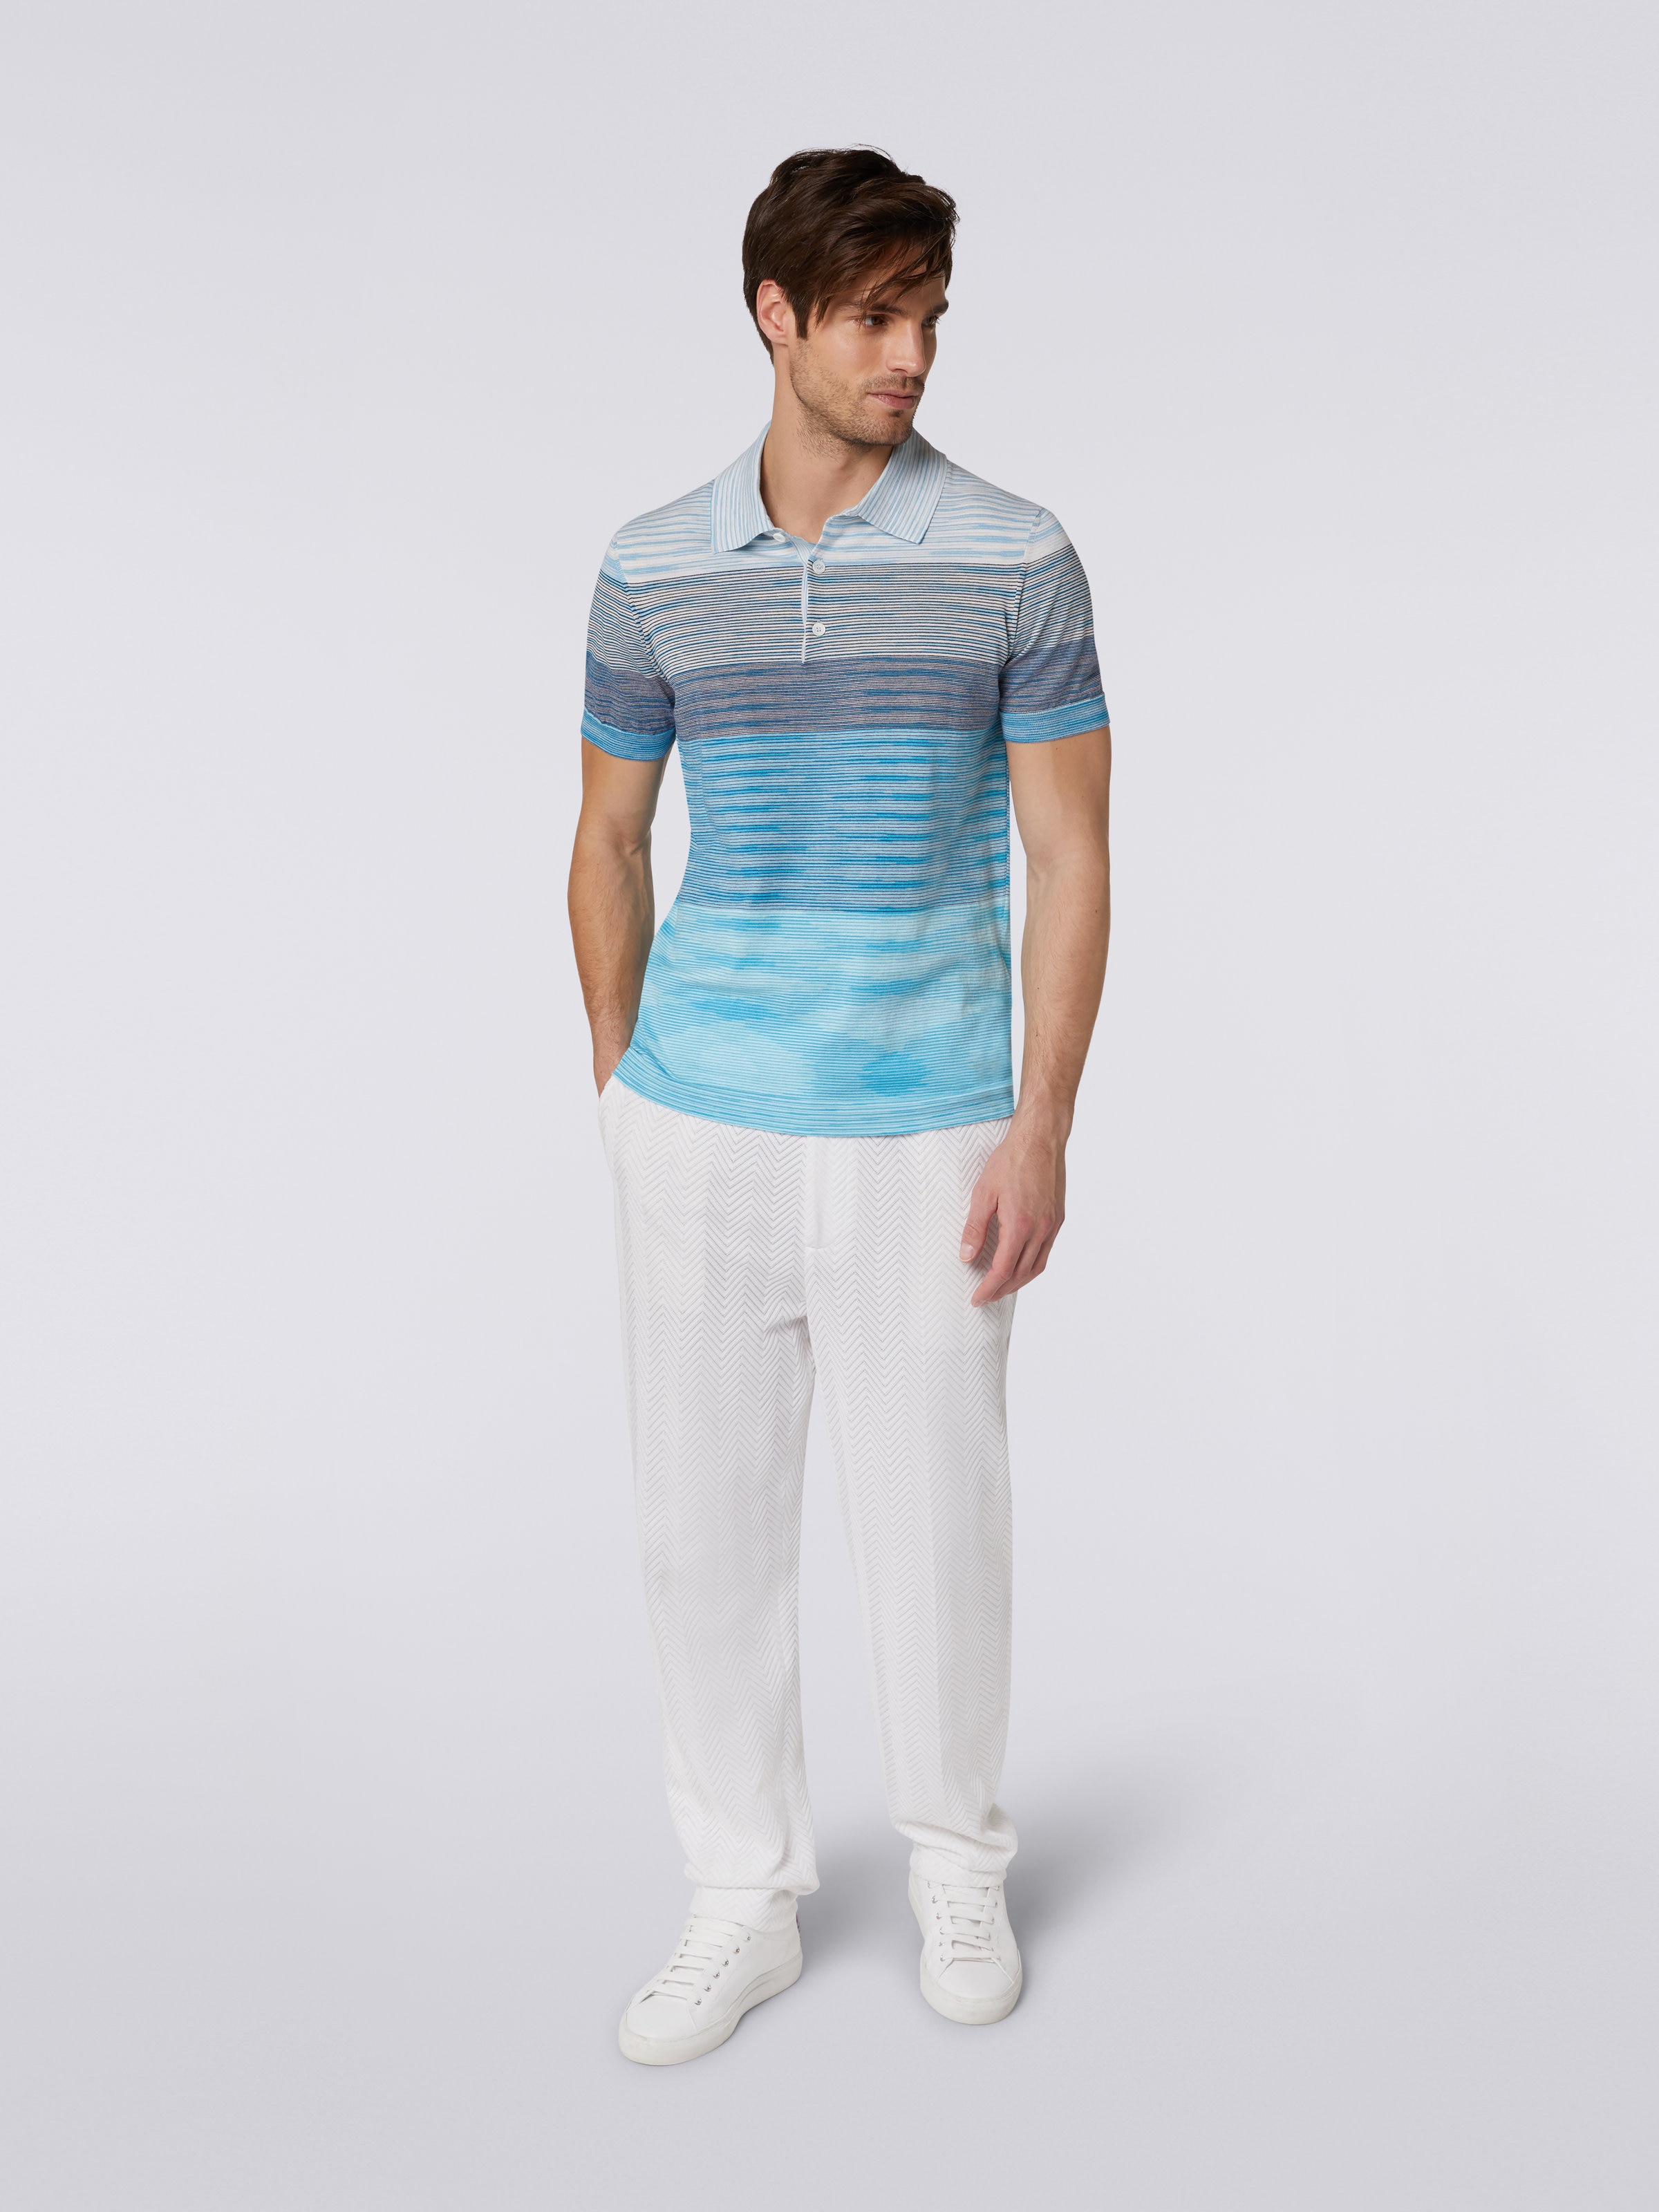 Dégradé striped cotton short-sleeved polo shirt, White & Light Blue - 1